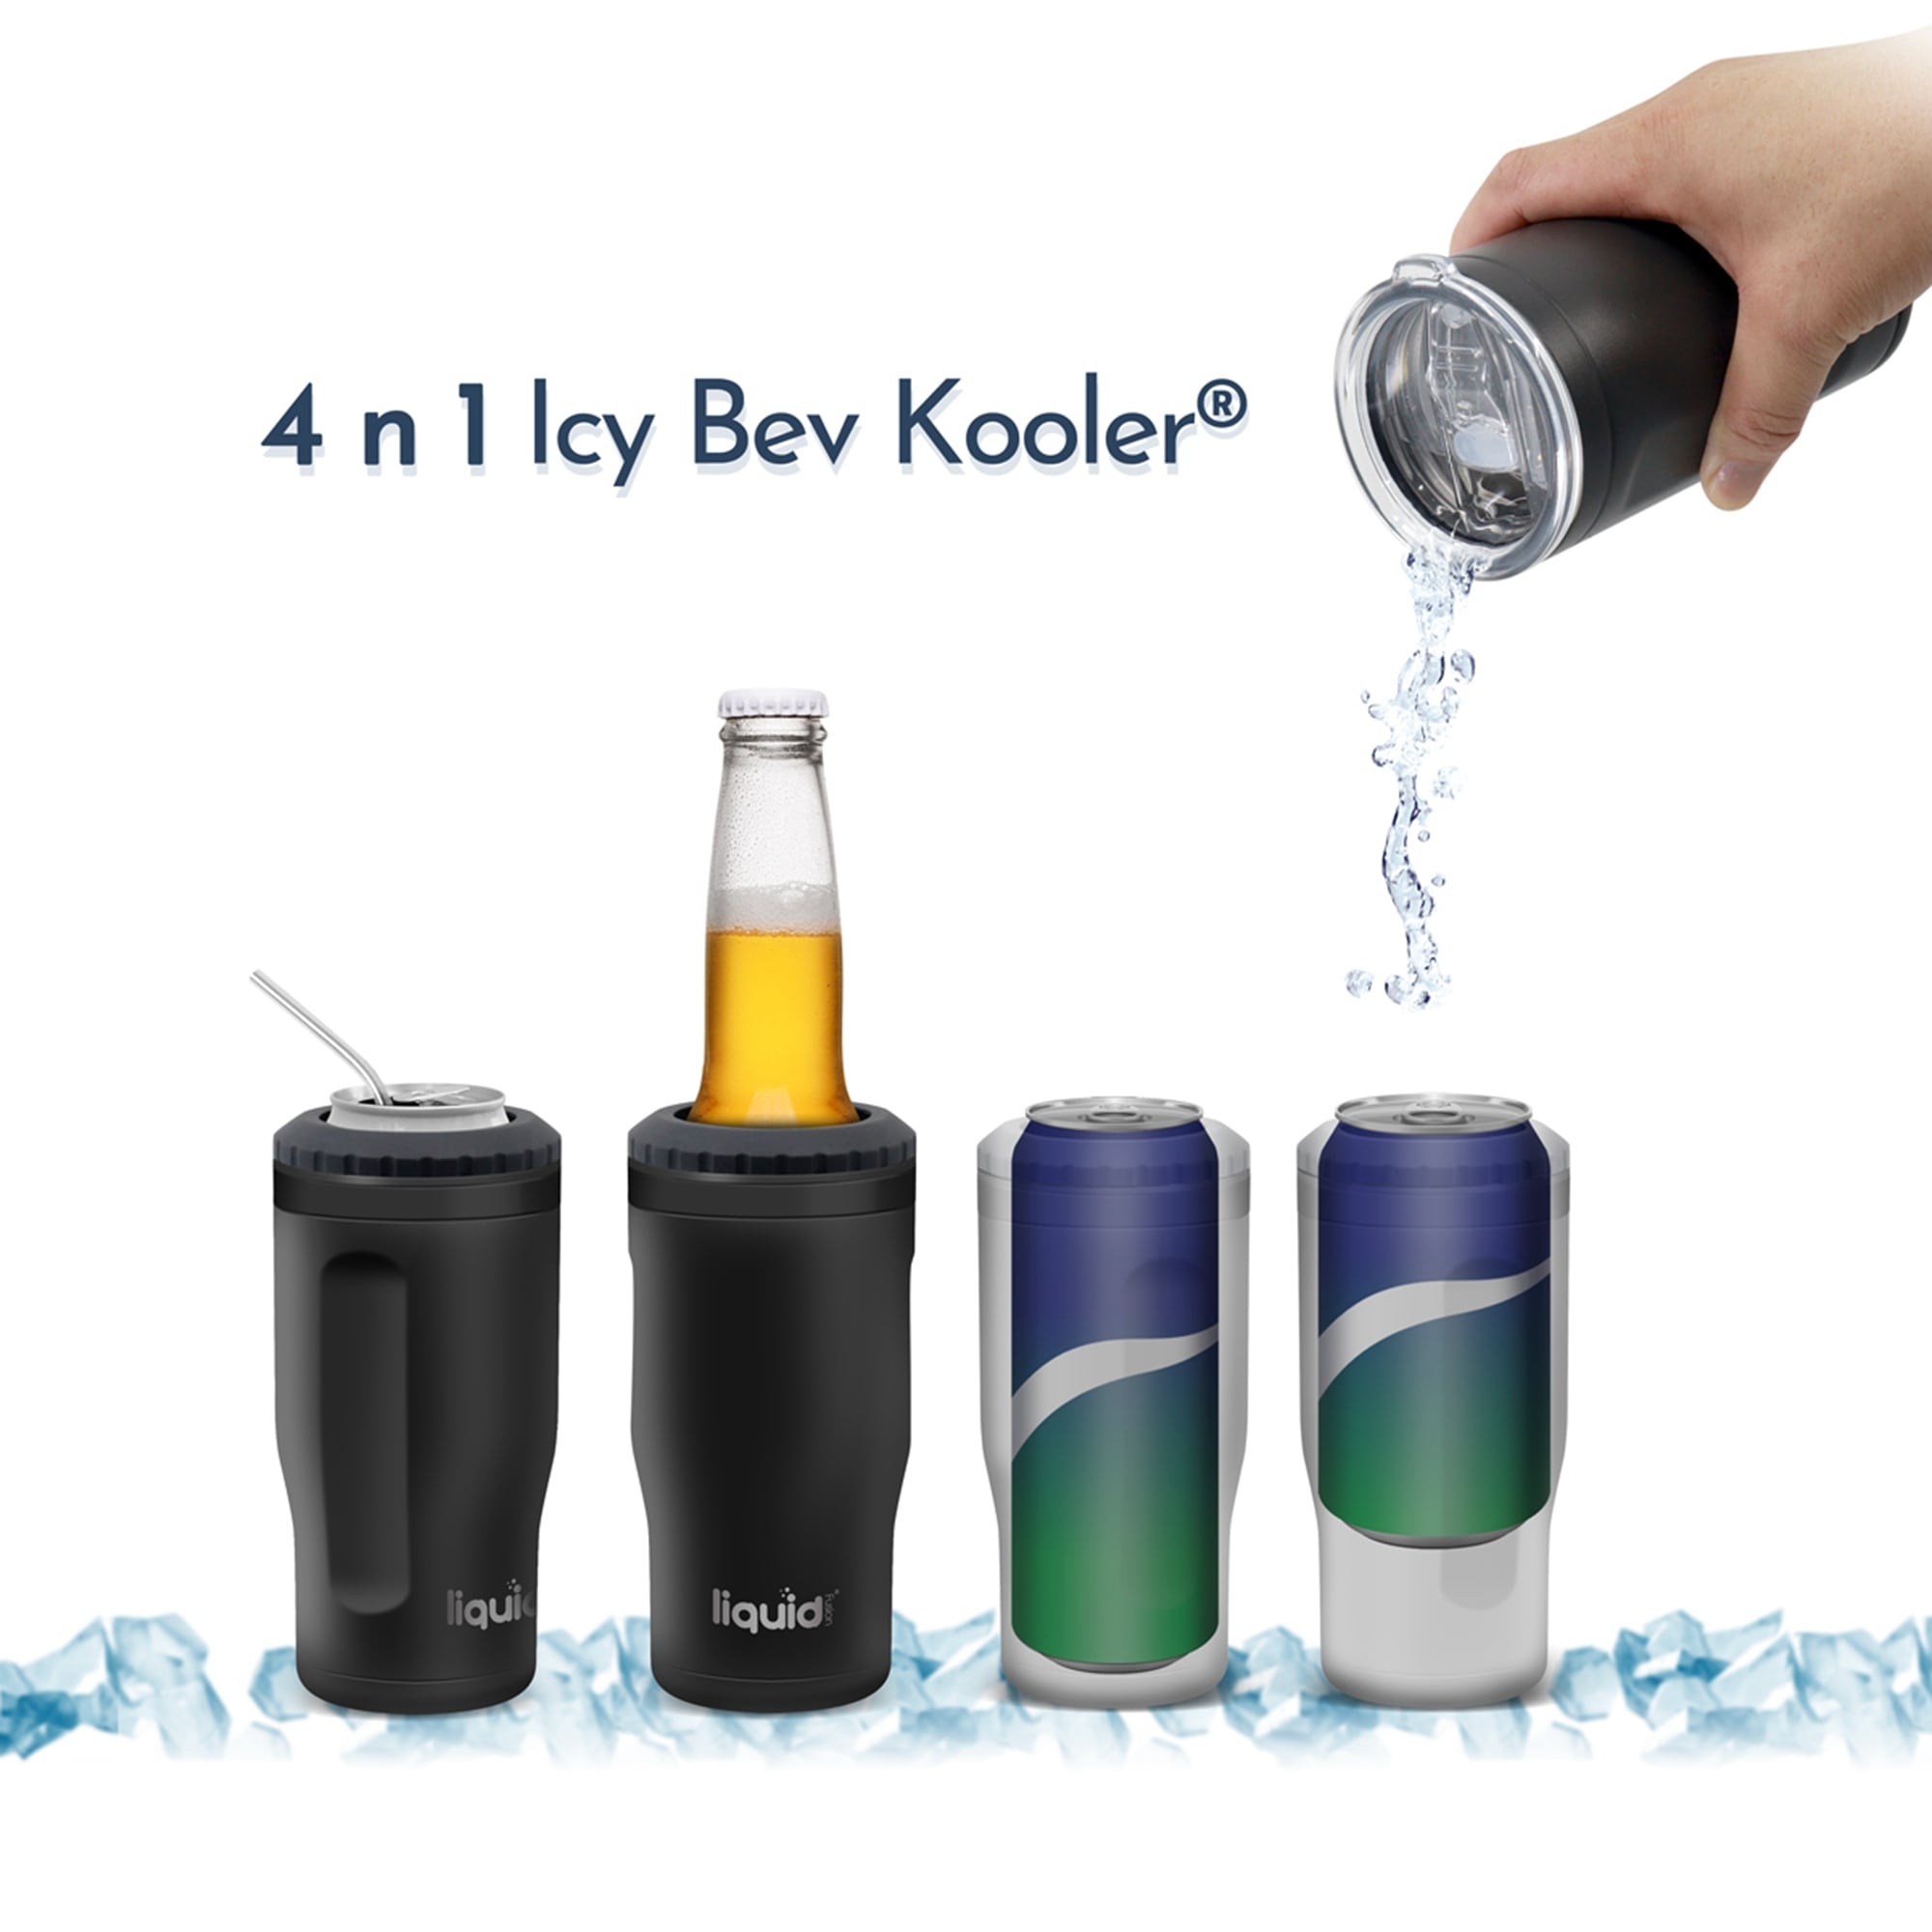 Grand Fusion Icy BEV Kooler Skinny Can Insulator - Blue